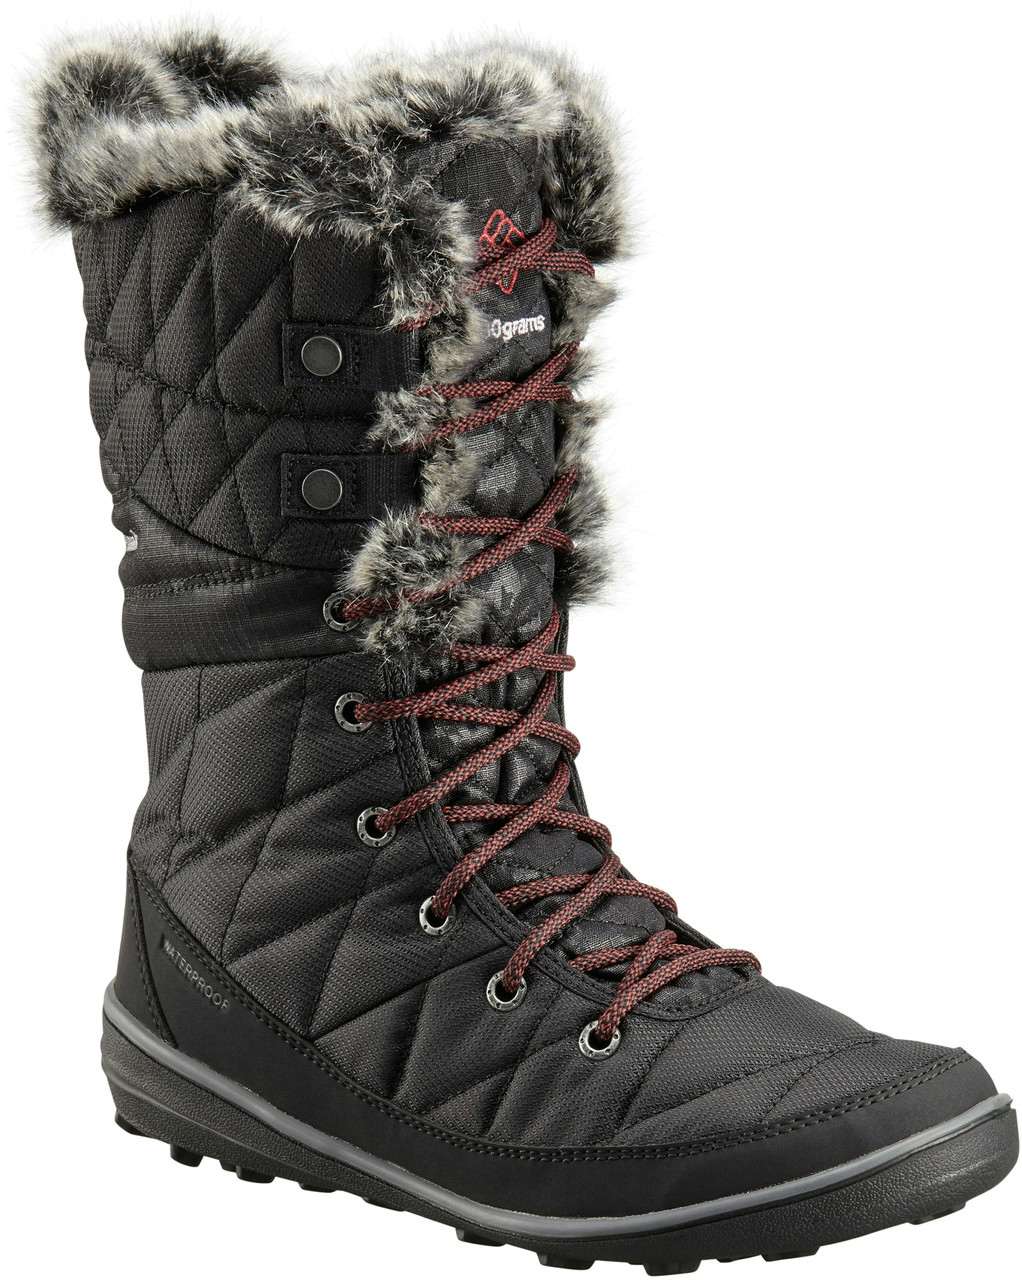 Heavenly Omni-Heat Winter Boots Black/Marsala Red